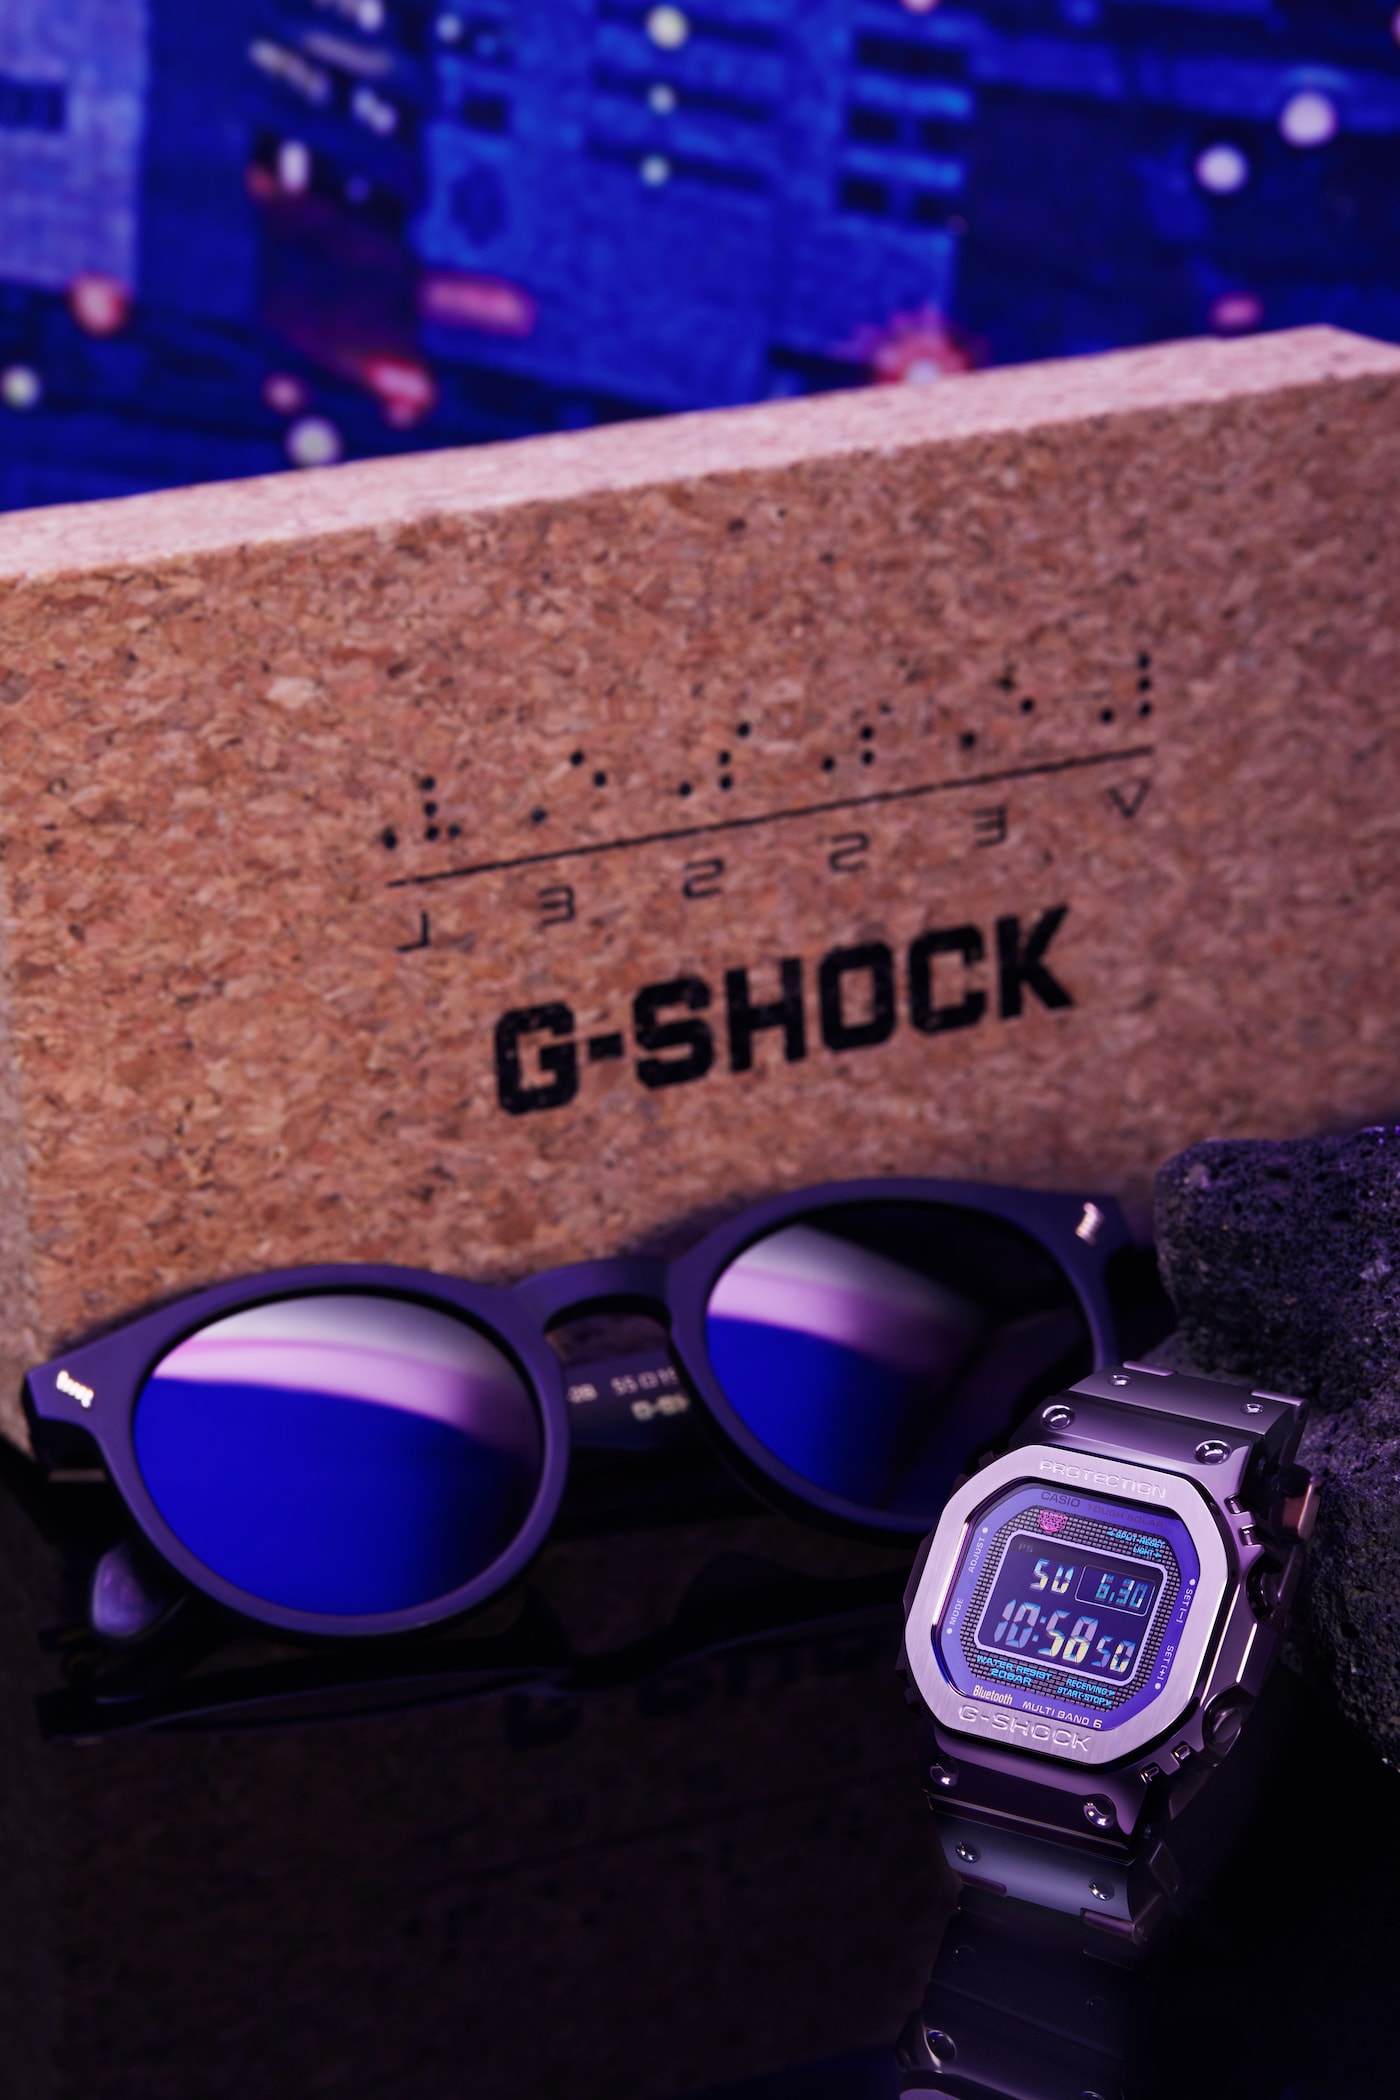 G-SHOCK 发布全新 GMW-B5000「东京暮色」腕表